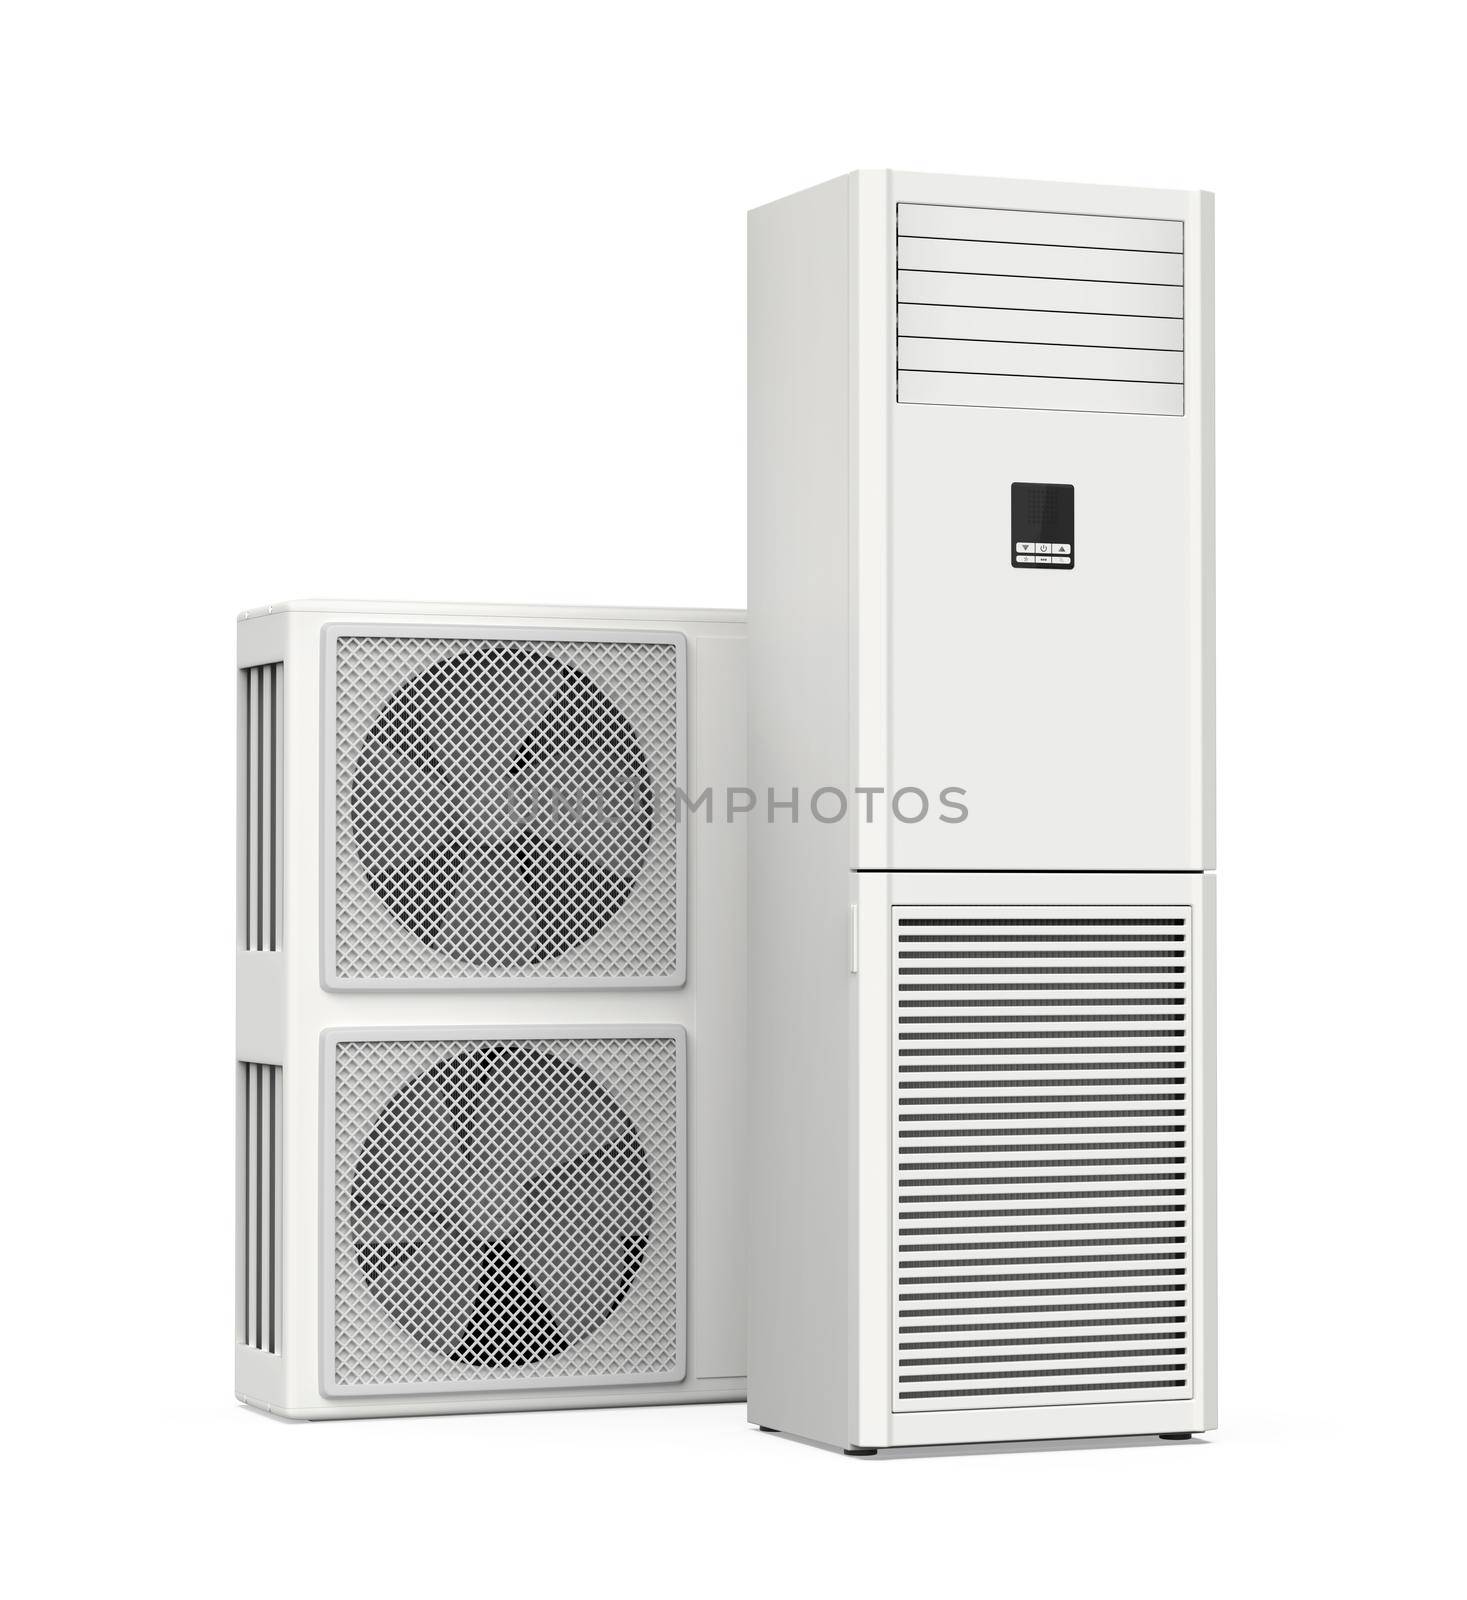 Big floor standing split system air conditioner on white background